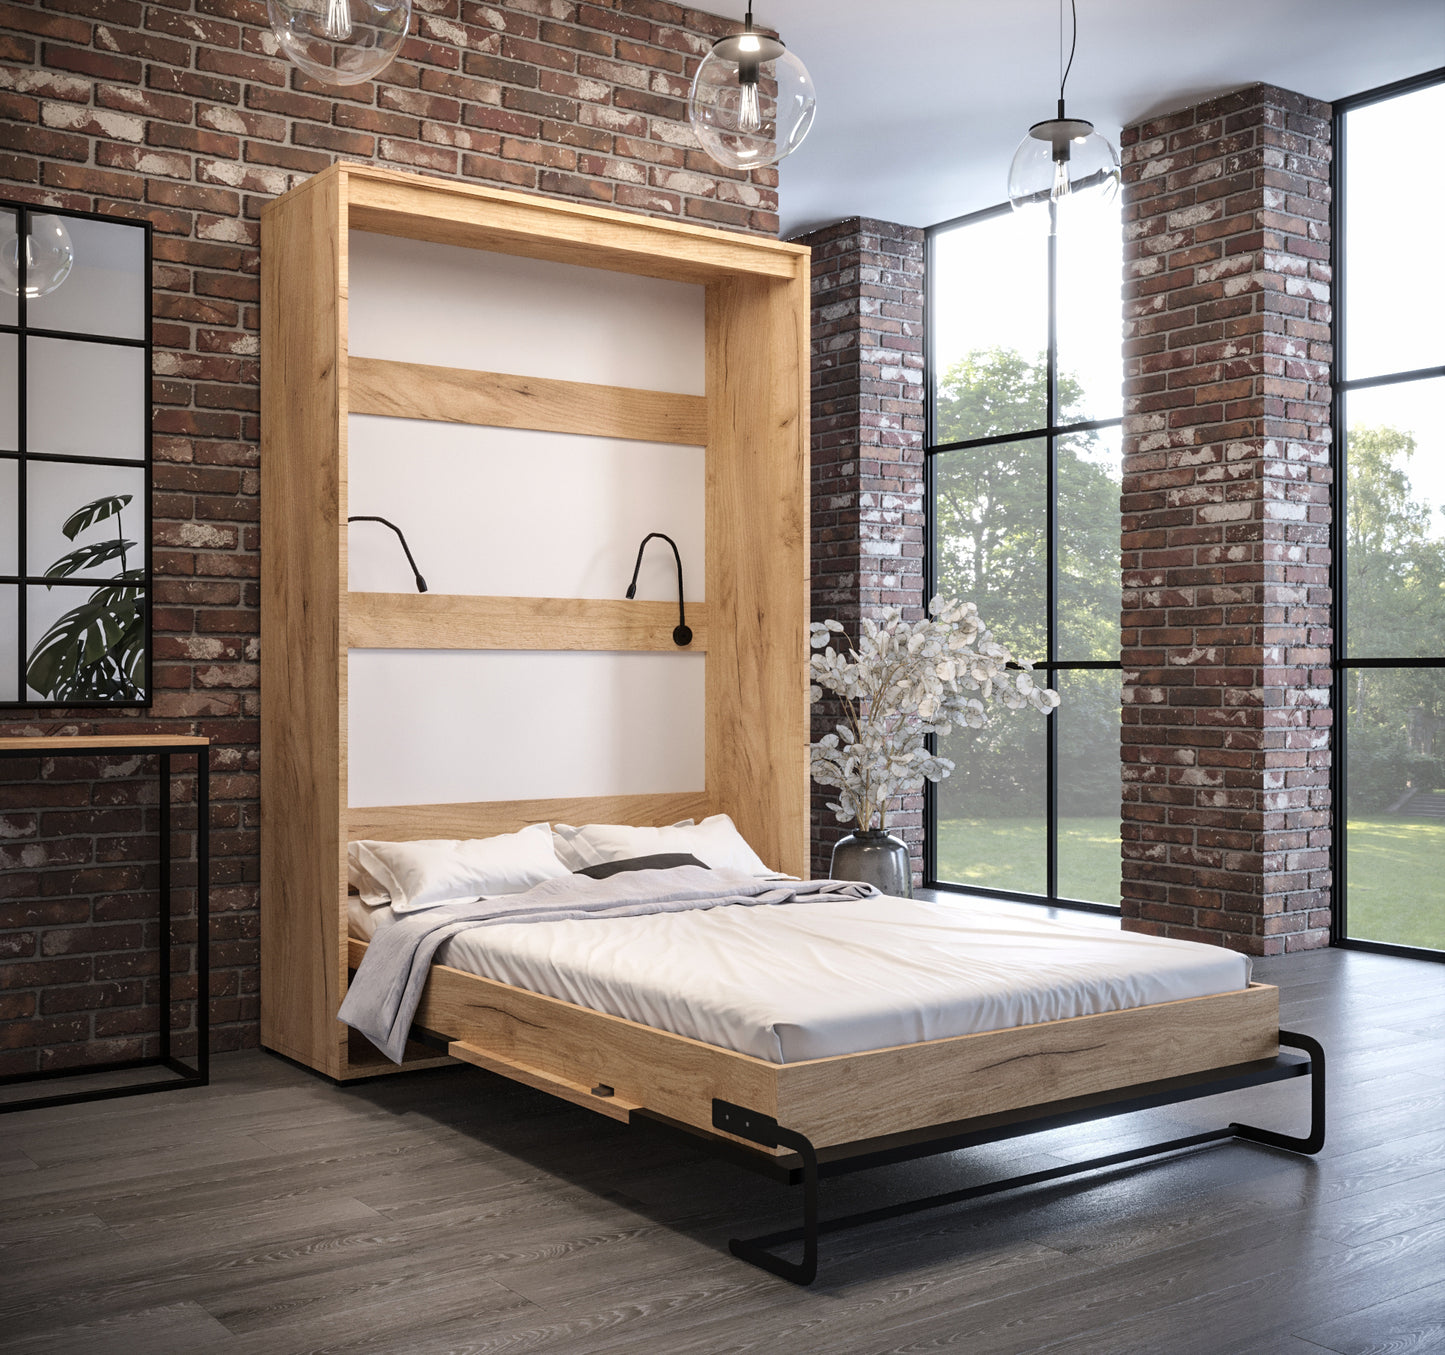 CASA LOFT BED - Vertical Bed Frame Space Saver Modern Led Lights Included 4 Sizes